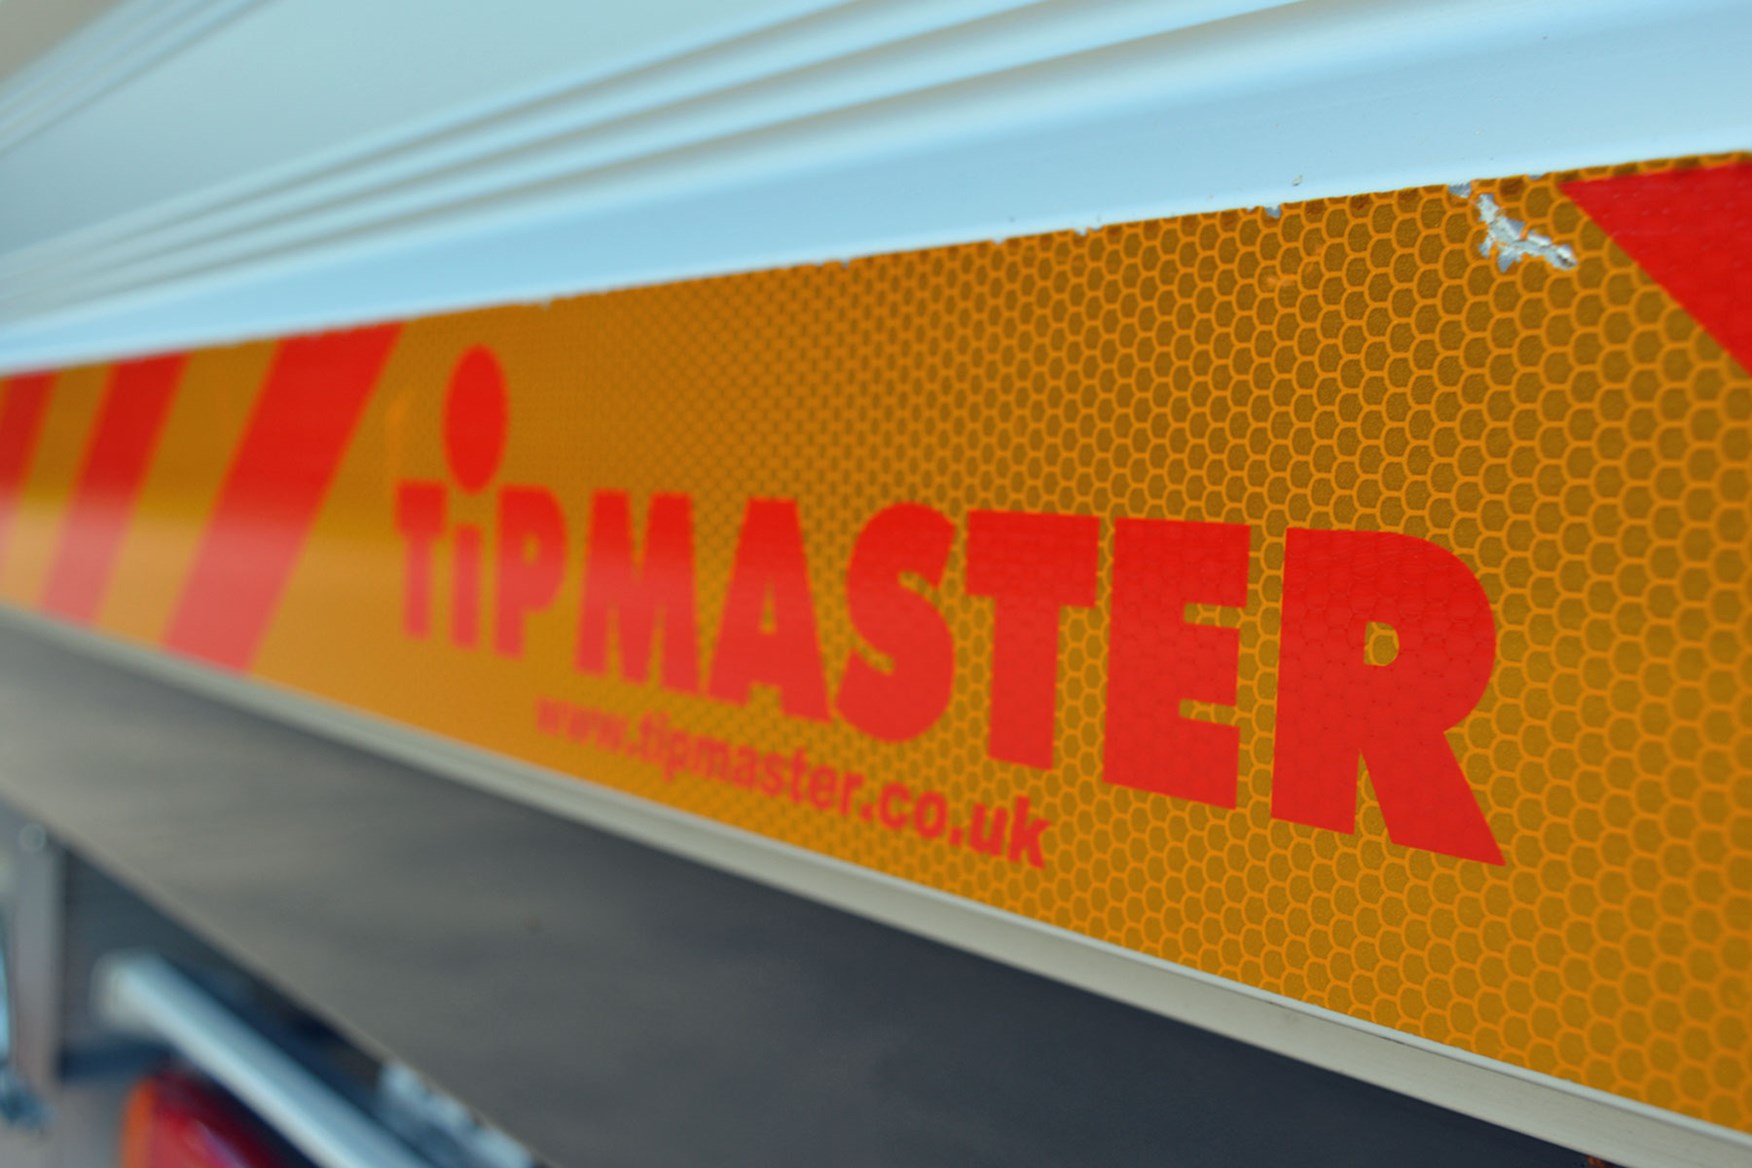 Citroen Relay 2.2 HDi Tipper review - Tipmaster logo